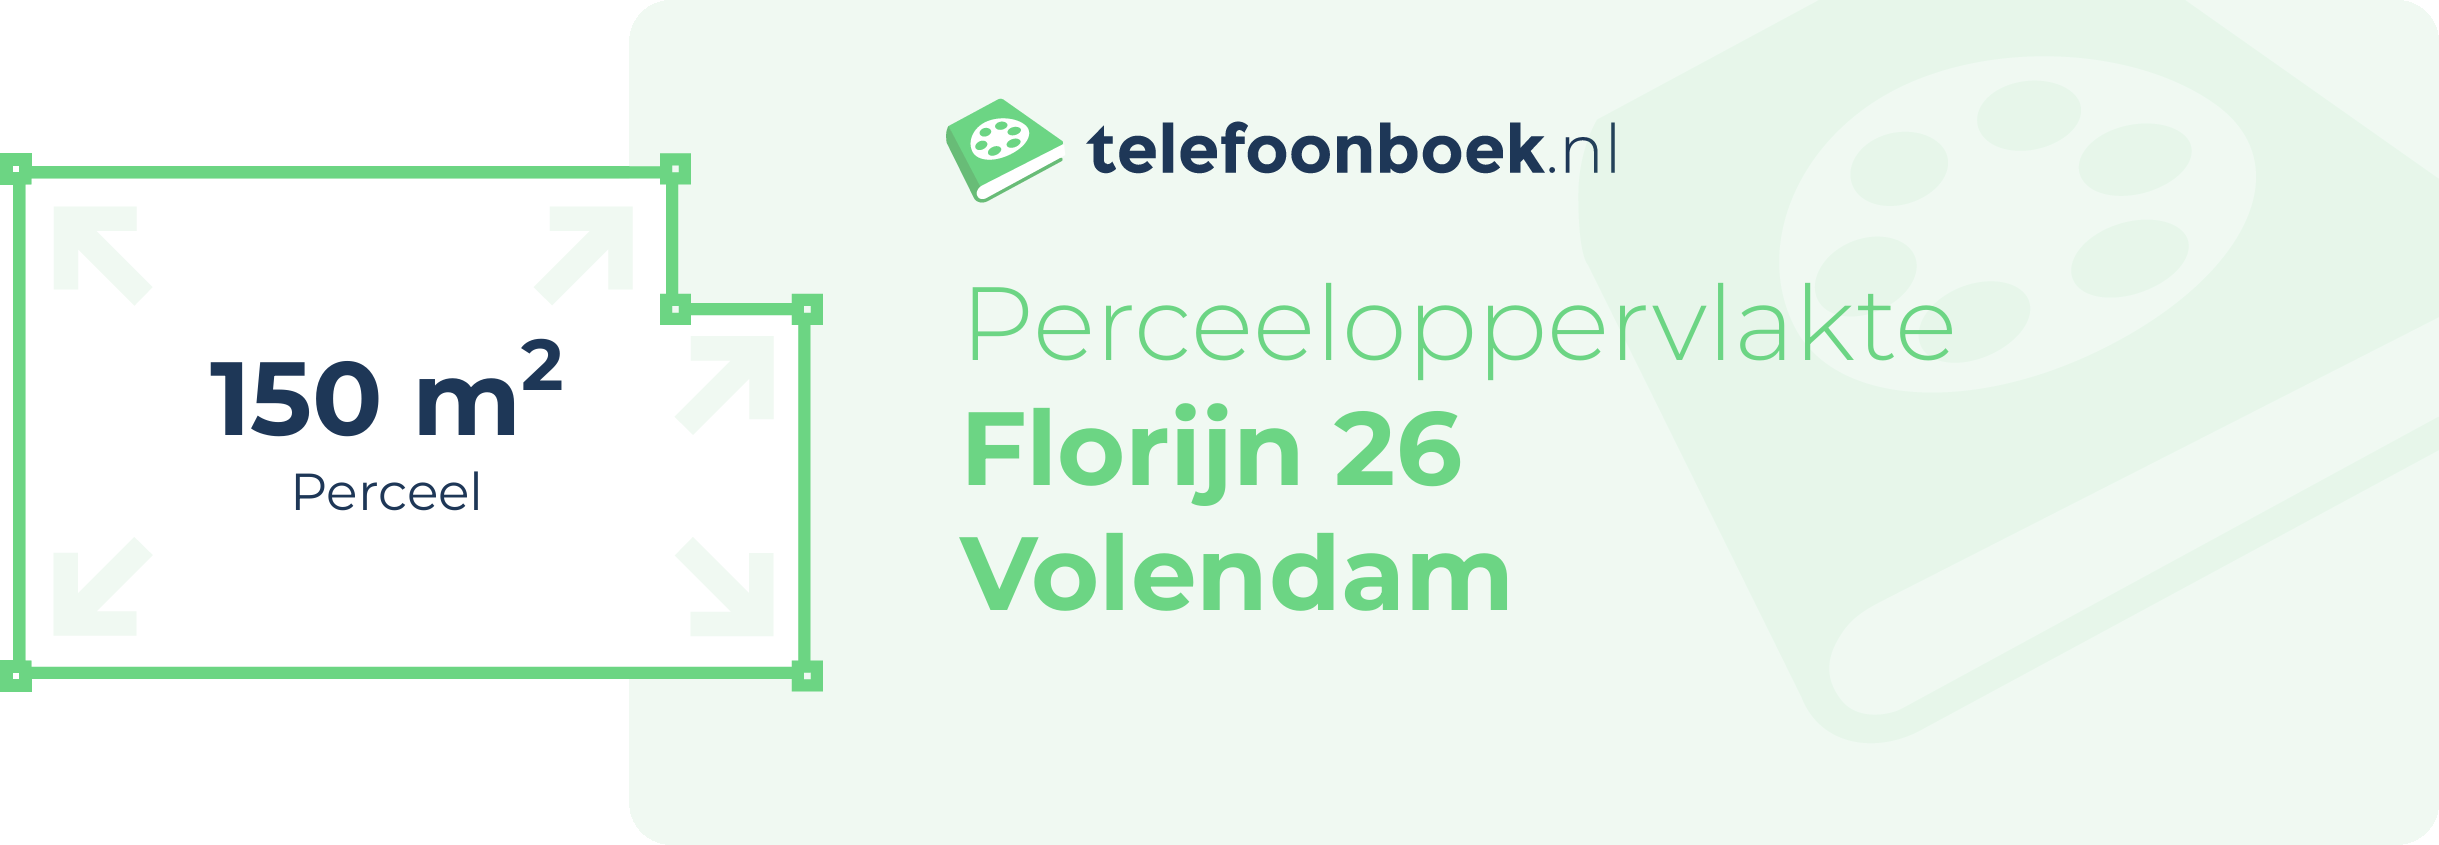 Perceeloppervlakte Florijn 26 Volendam